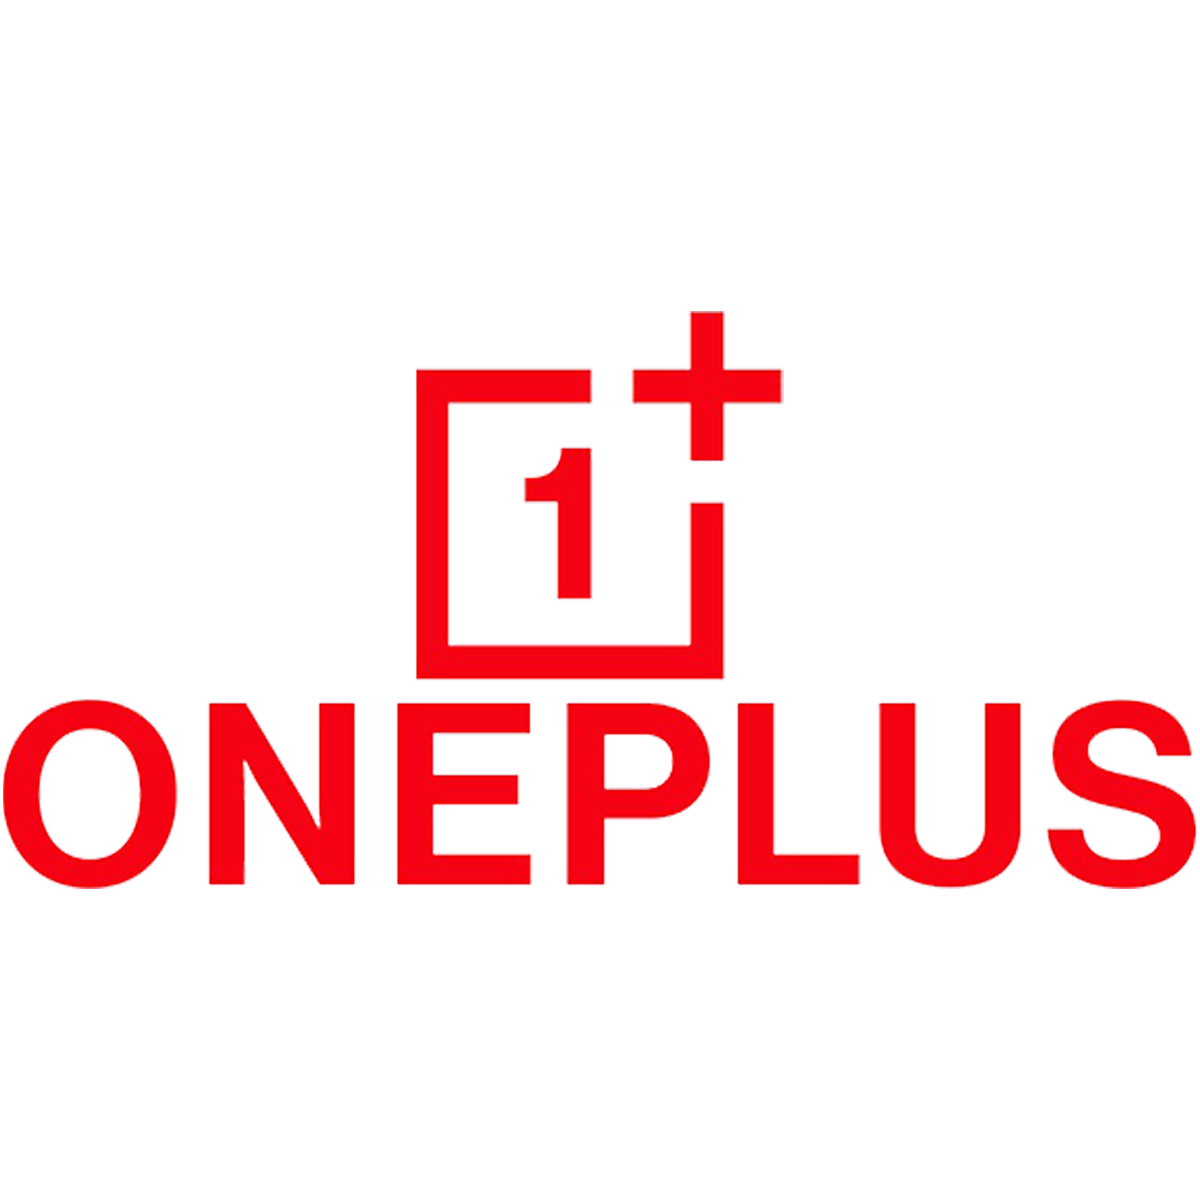 Logo ONEPLUS